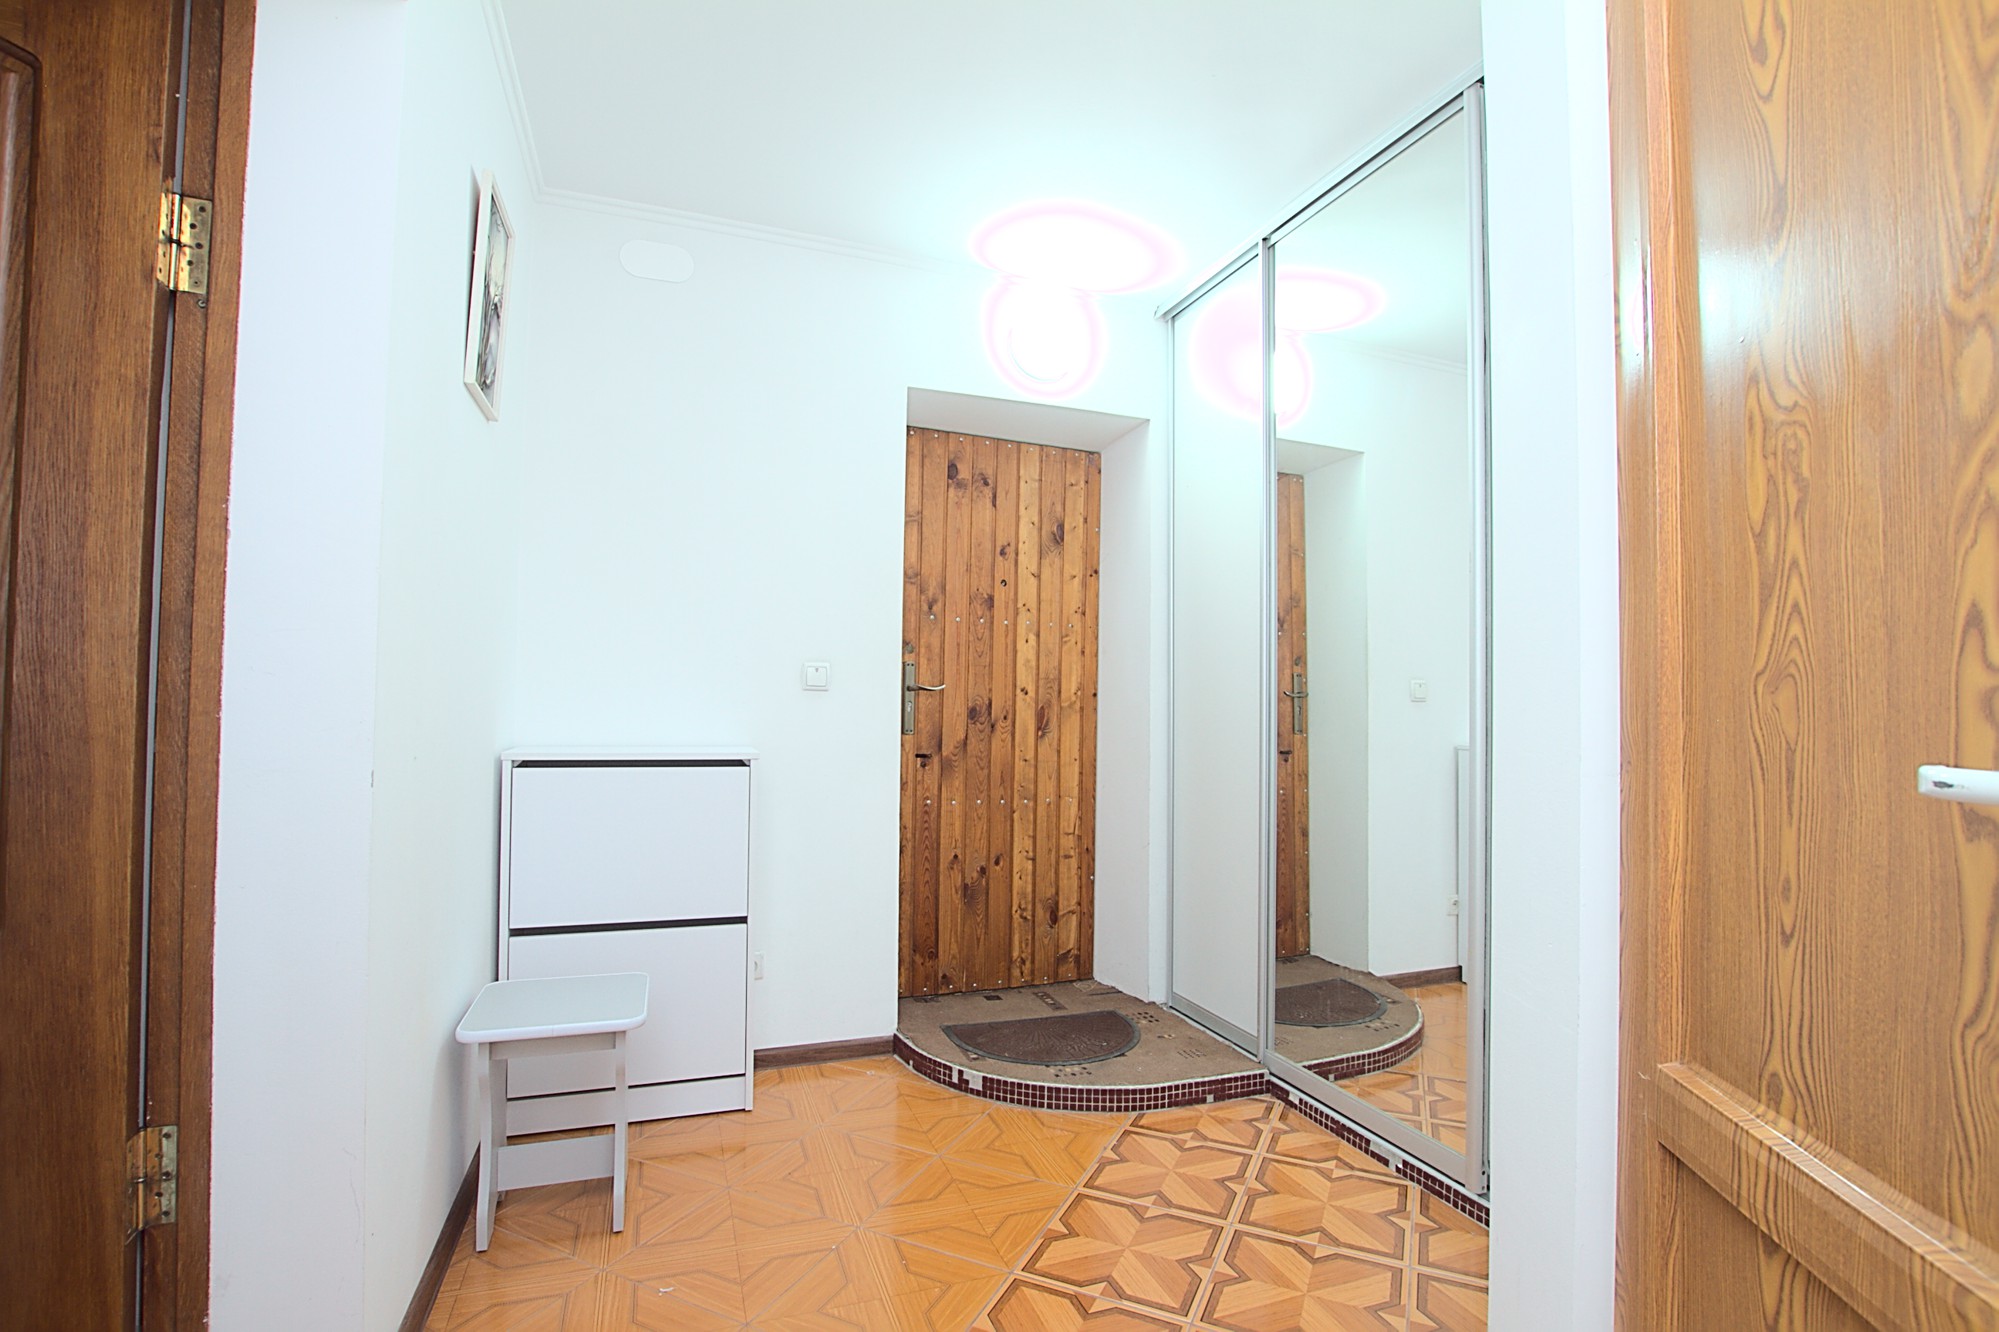 Elena's house ist ein 1 Zimmer Apartment zur Miete in Chisinau, Moldova